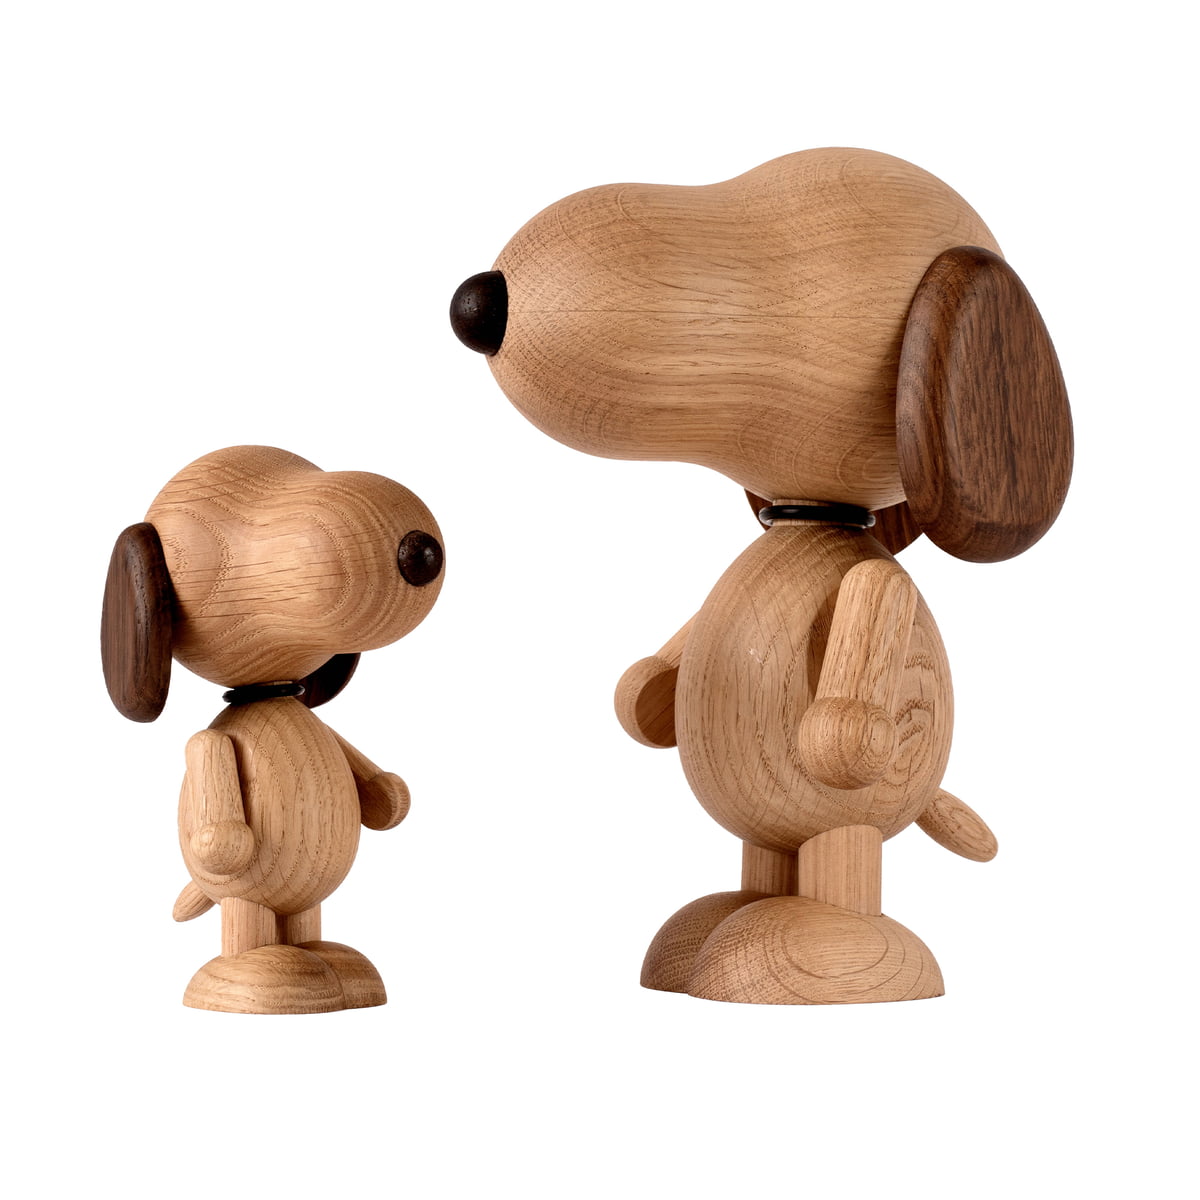 boyhood - Snoopy Wooden figure